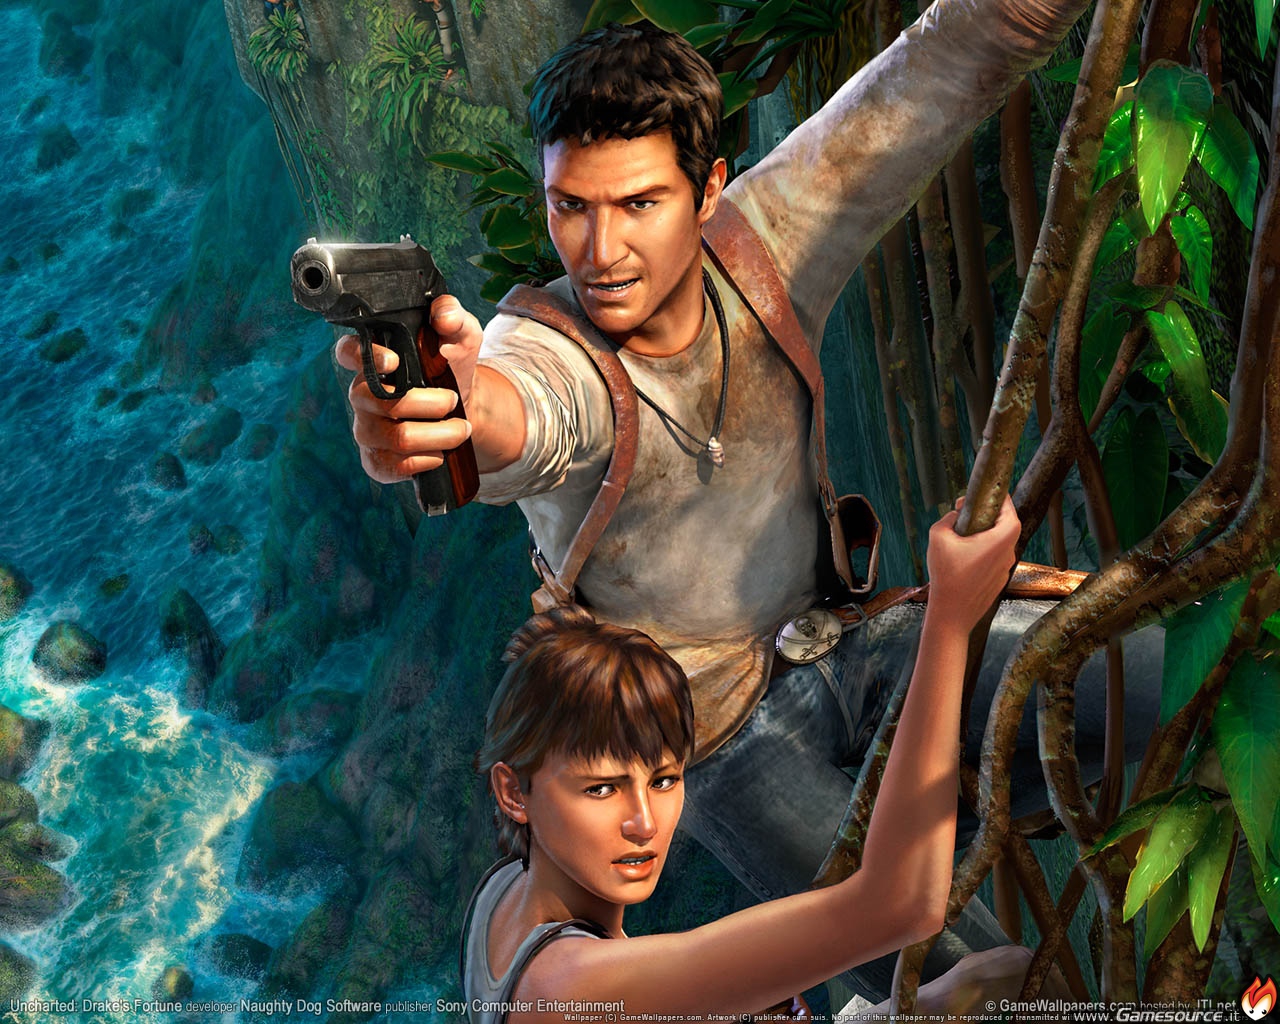 Uncharted: i primi tre capitoli approderanno su PlayStation 4?